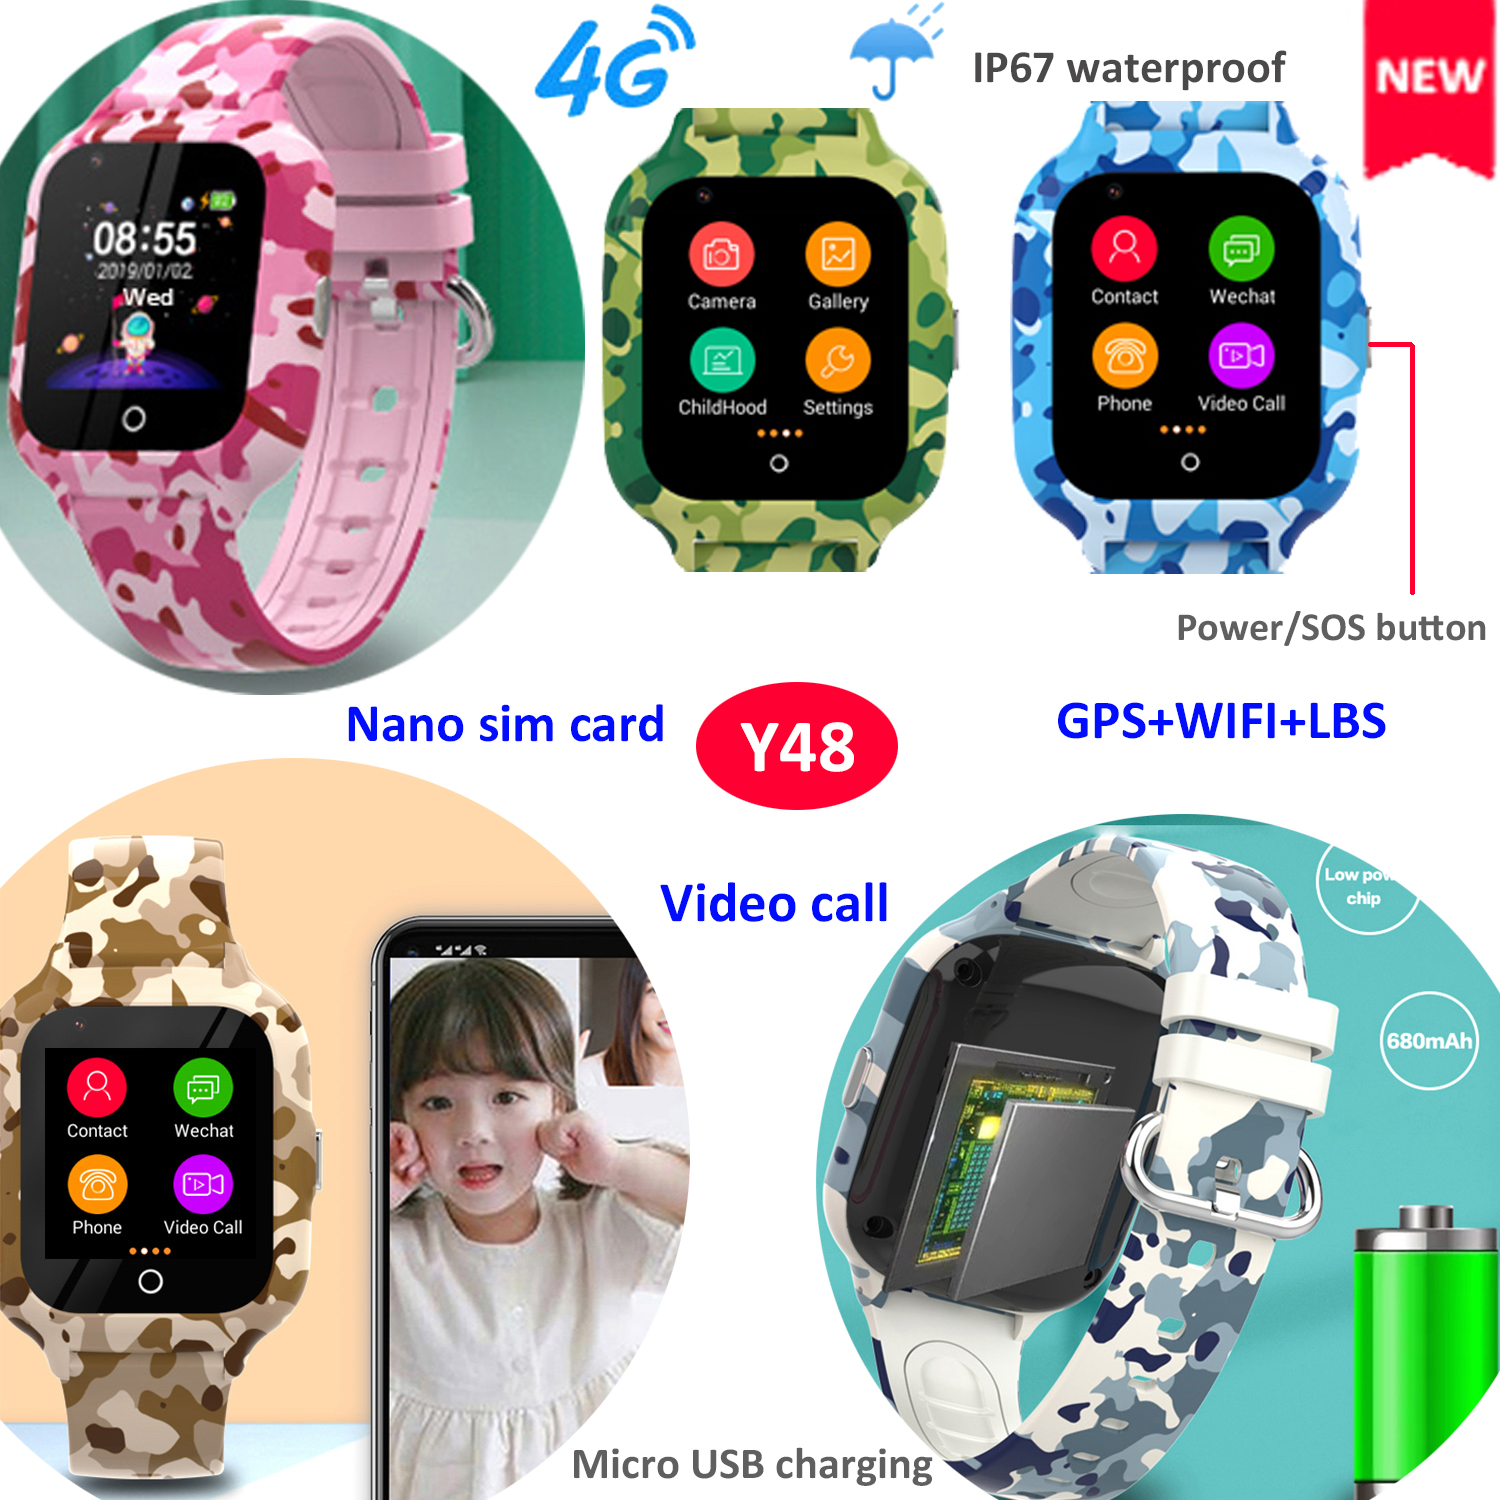 New IP67 waterproof 4G Children GPS Watch Tracker for Kids Safety 